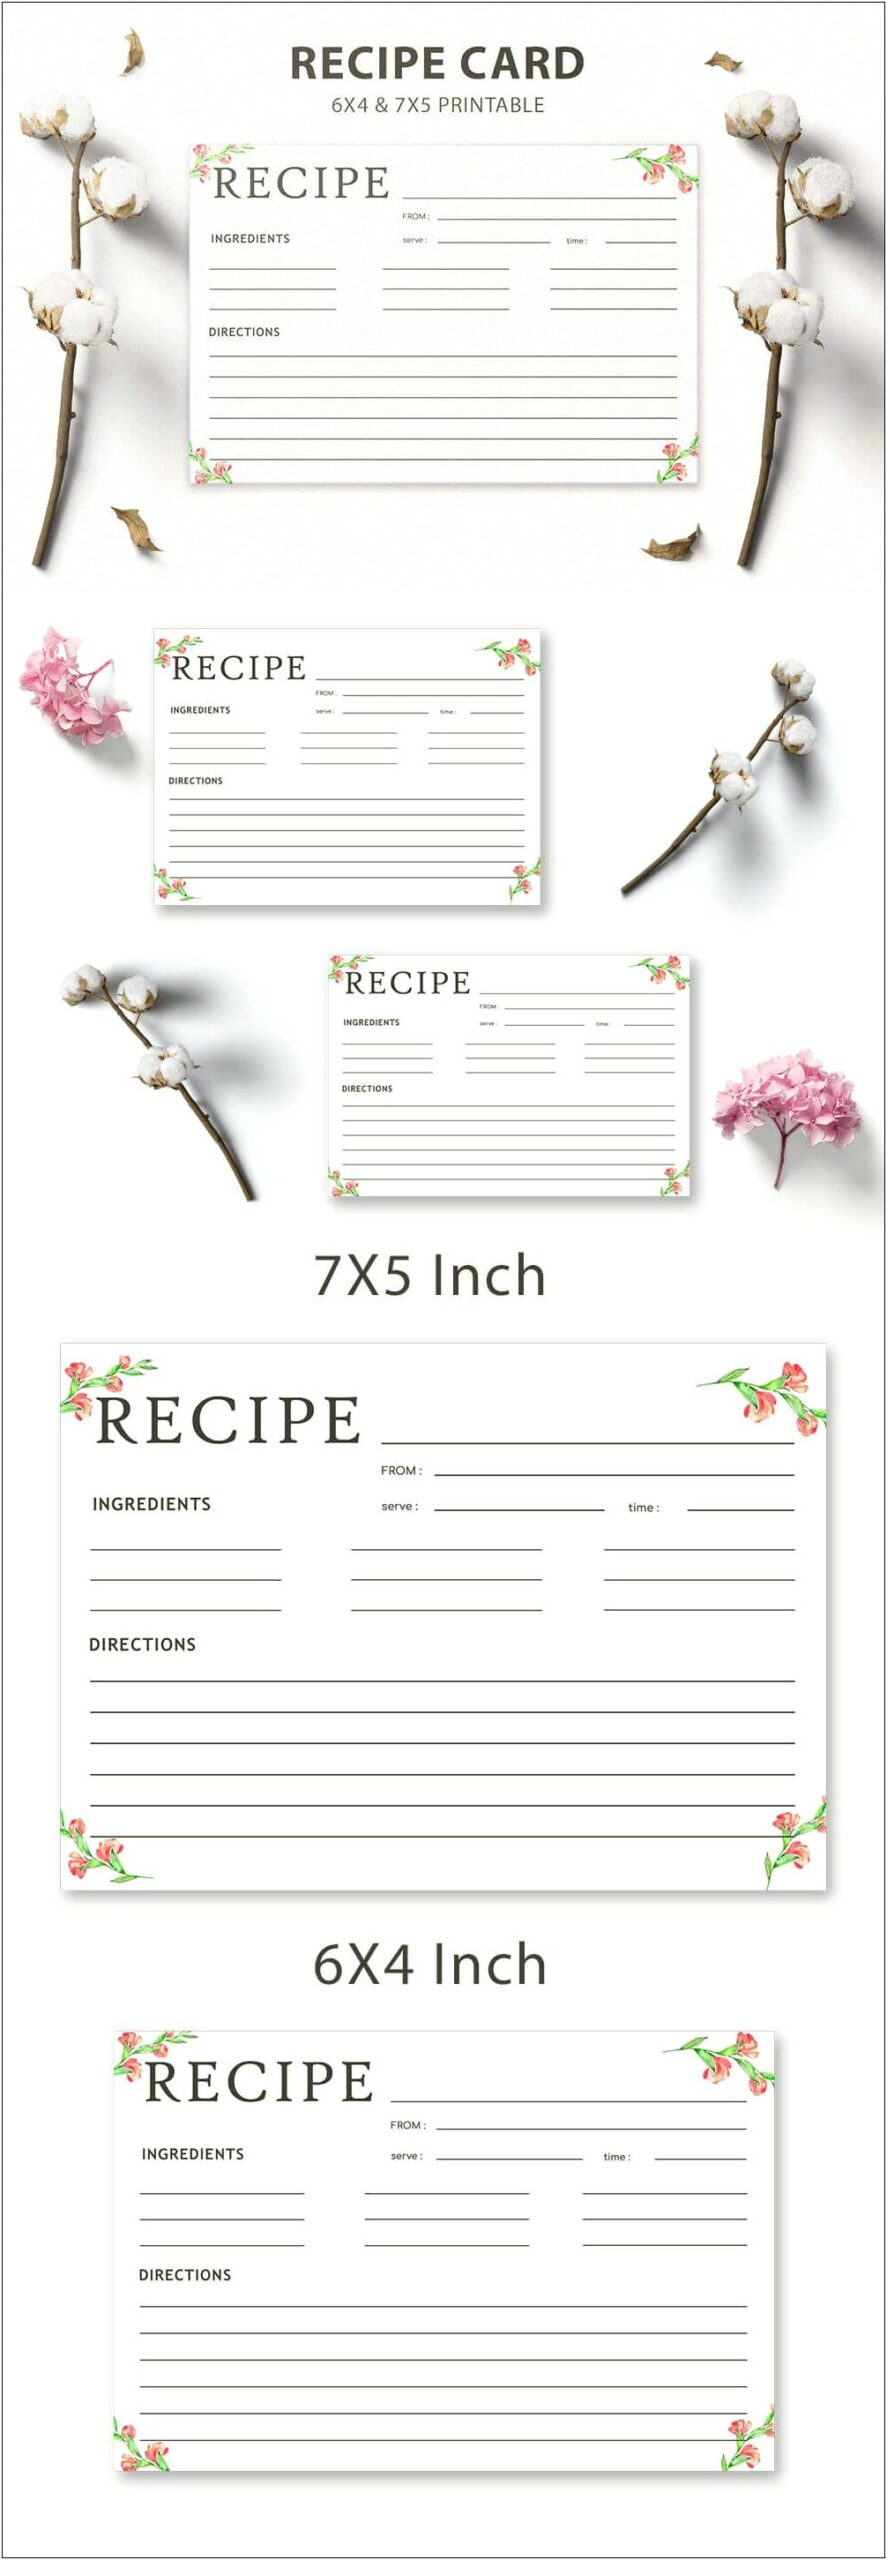 Microsoft Word 6x4 Recipe Card Template